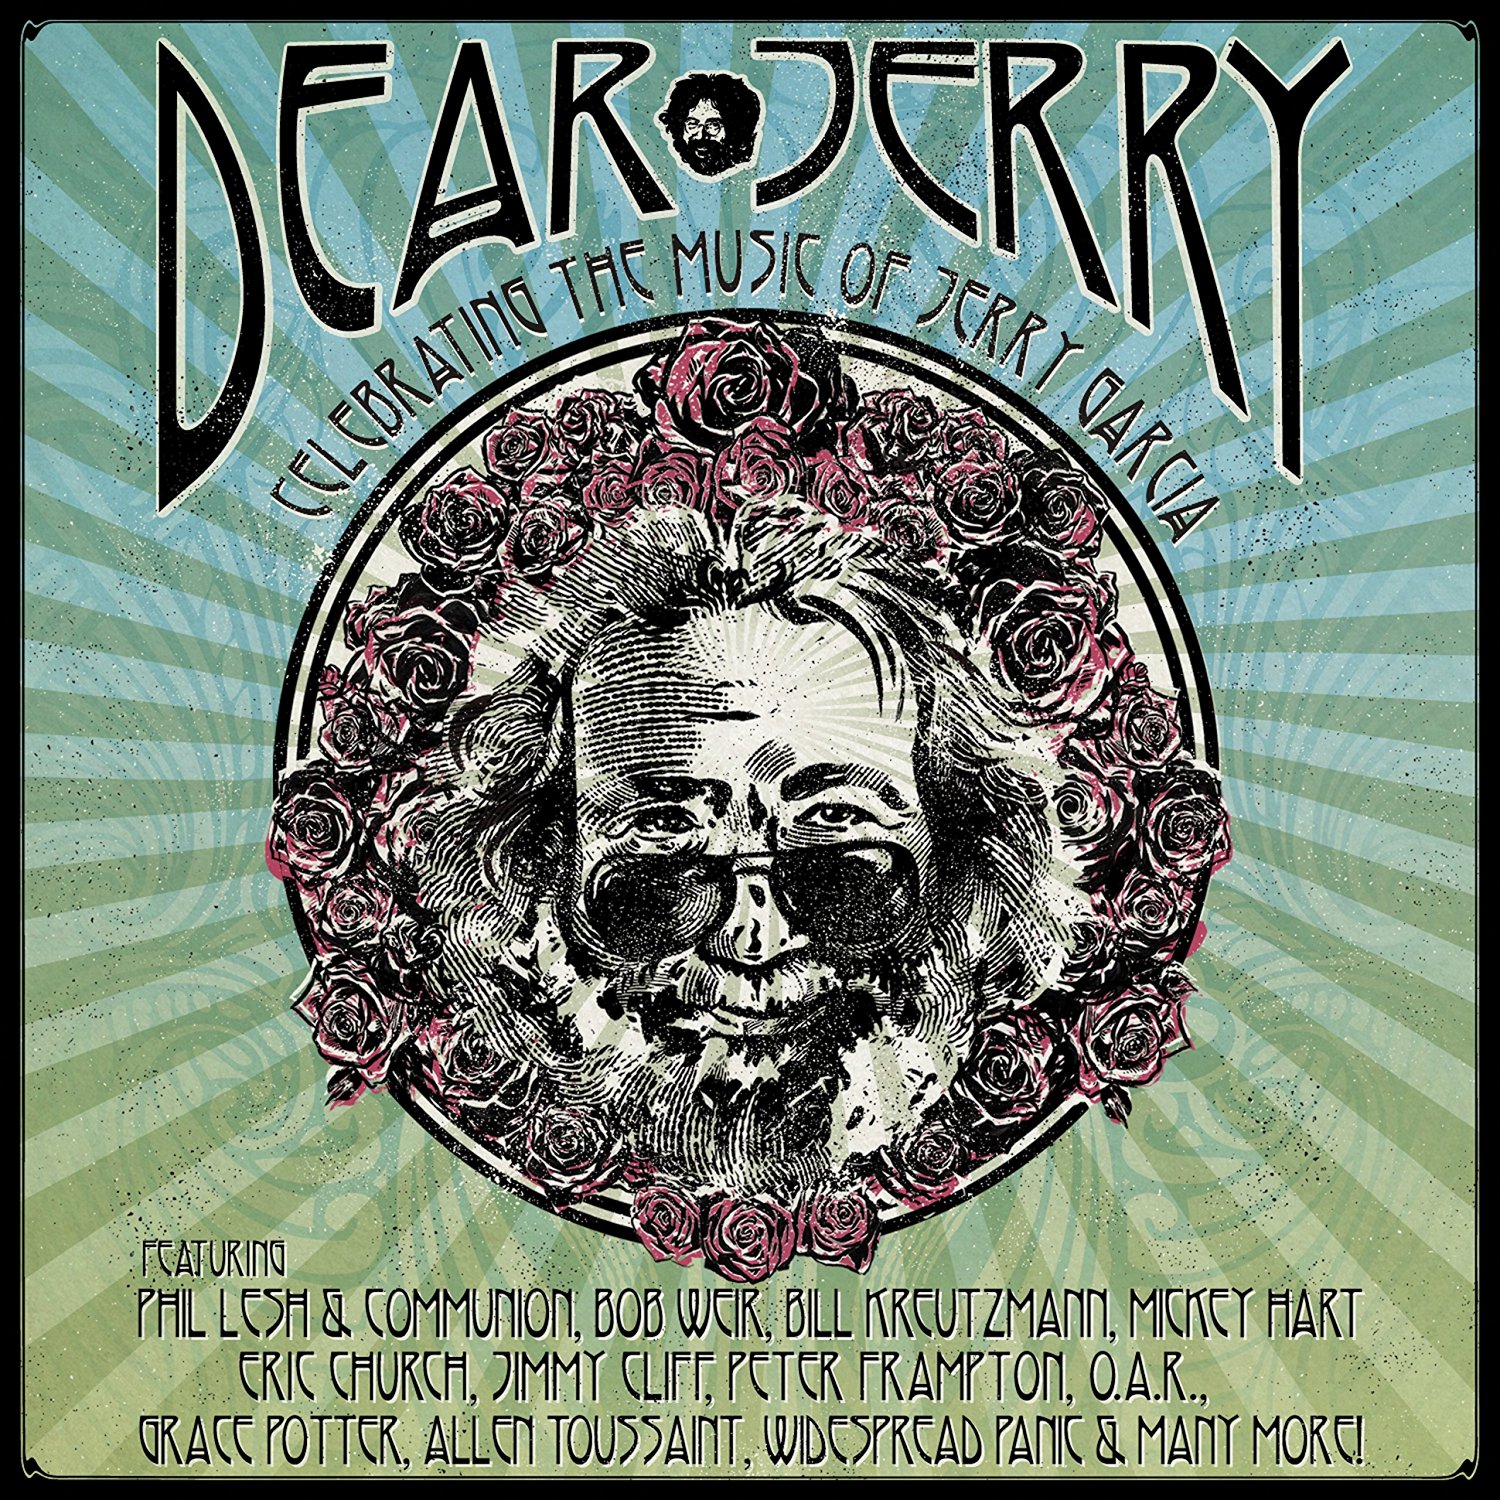 VA - Dear Jerry: Celebrating The Music Of Jerry Garcia (2016) [ProStudioMasters FLAC 24bit/48kHz]